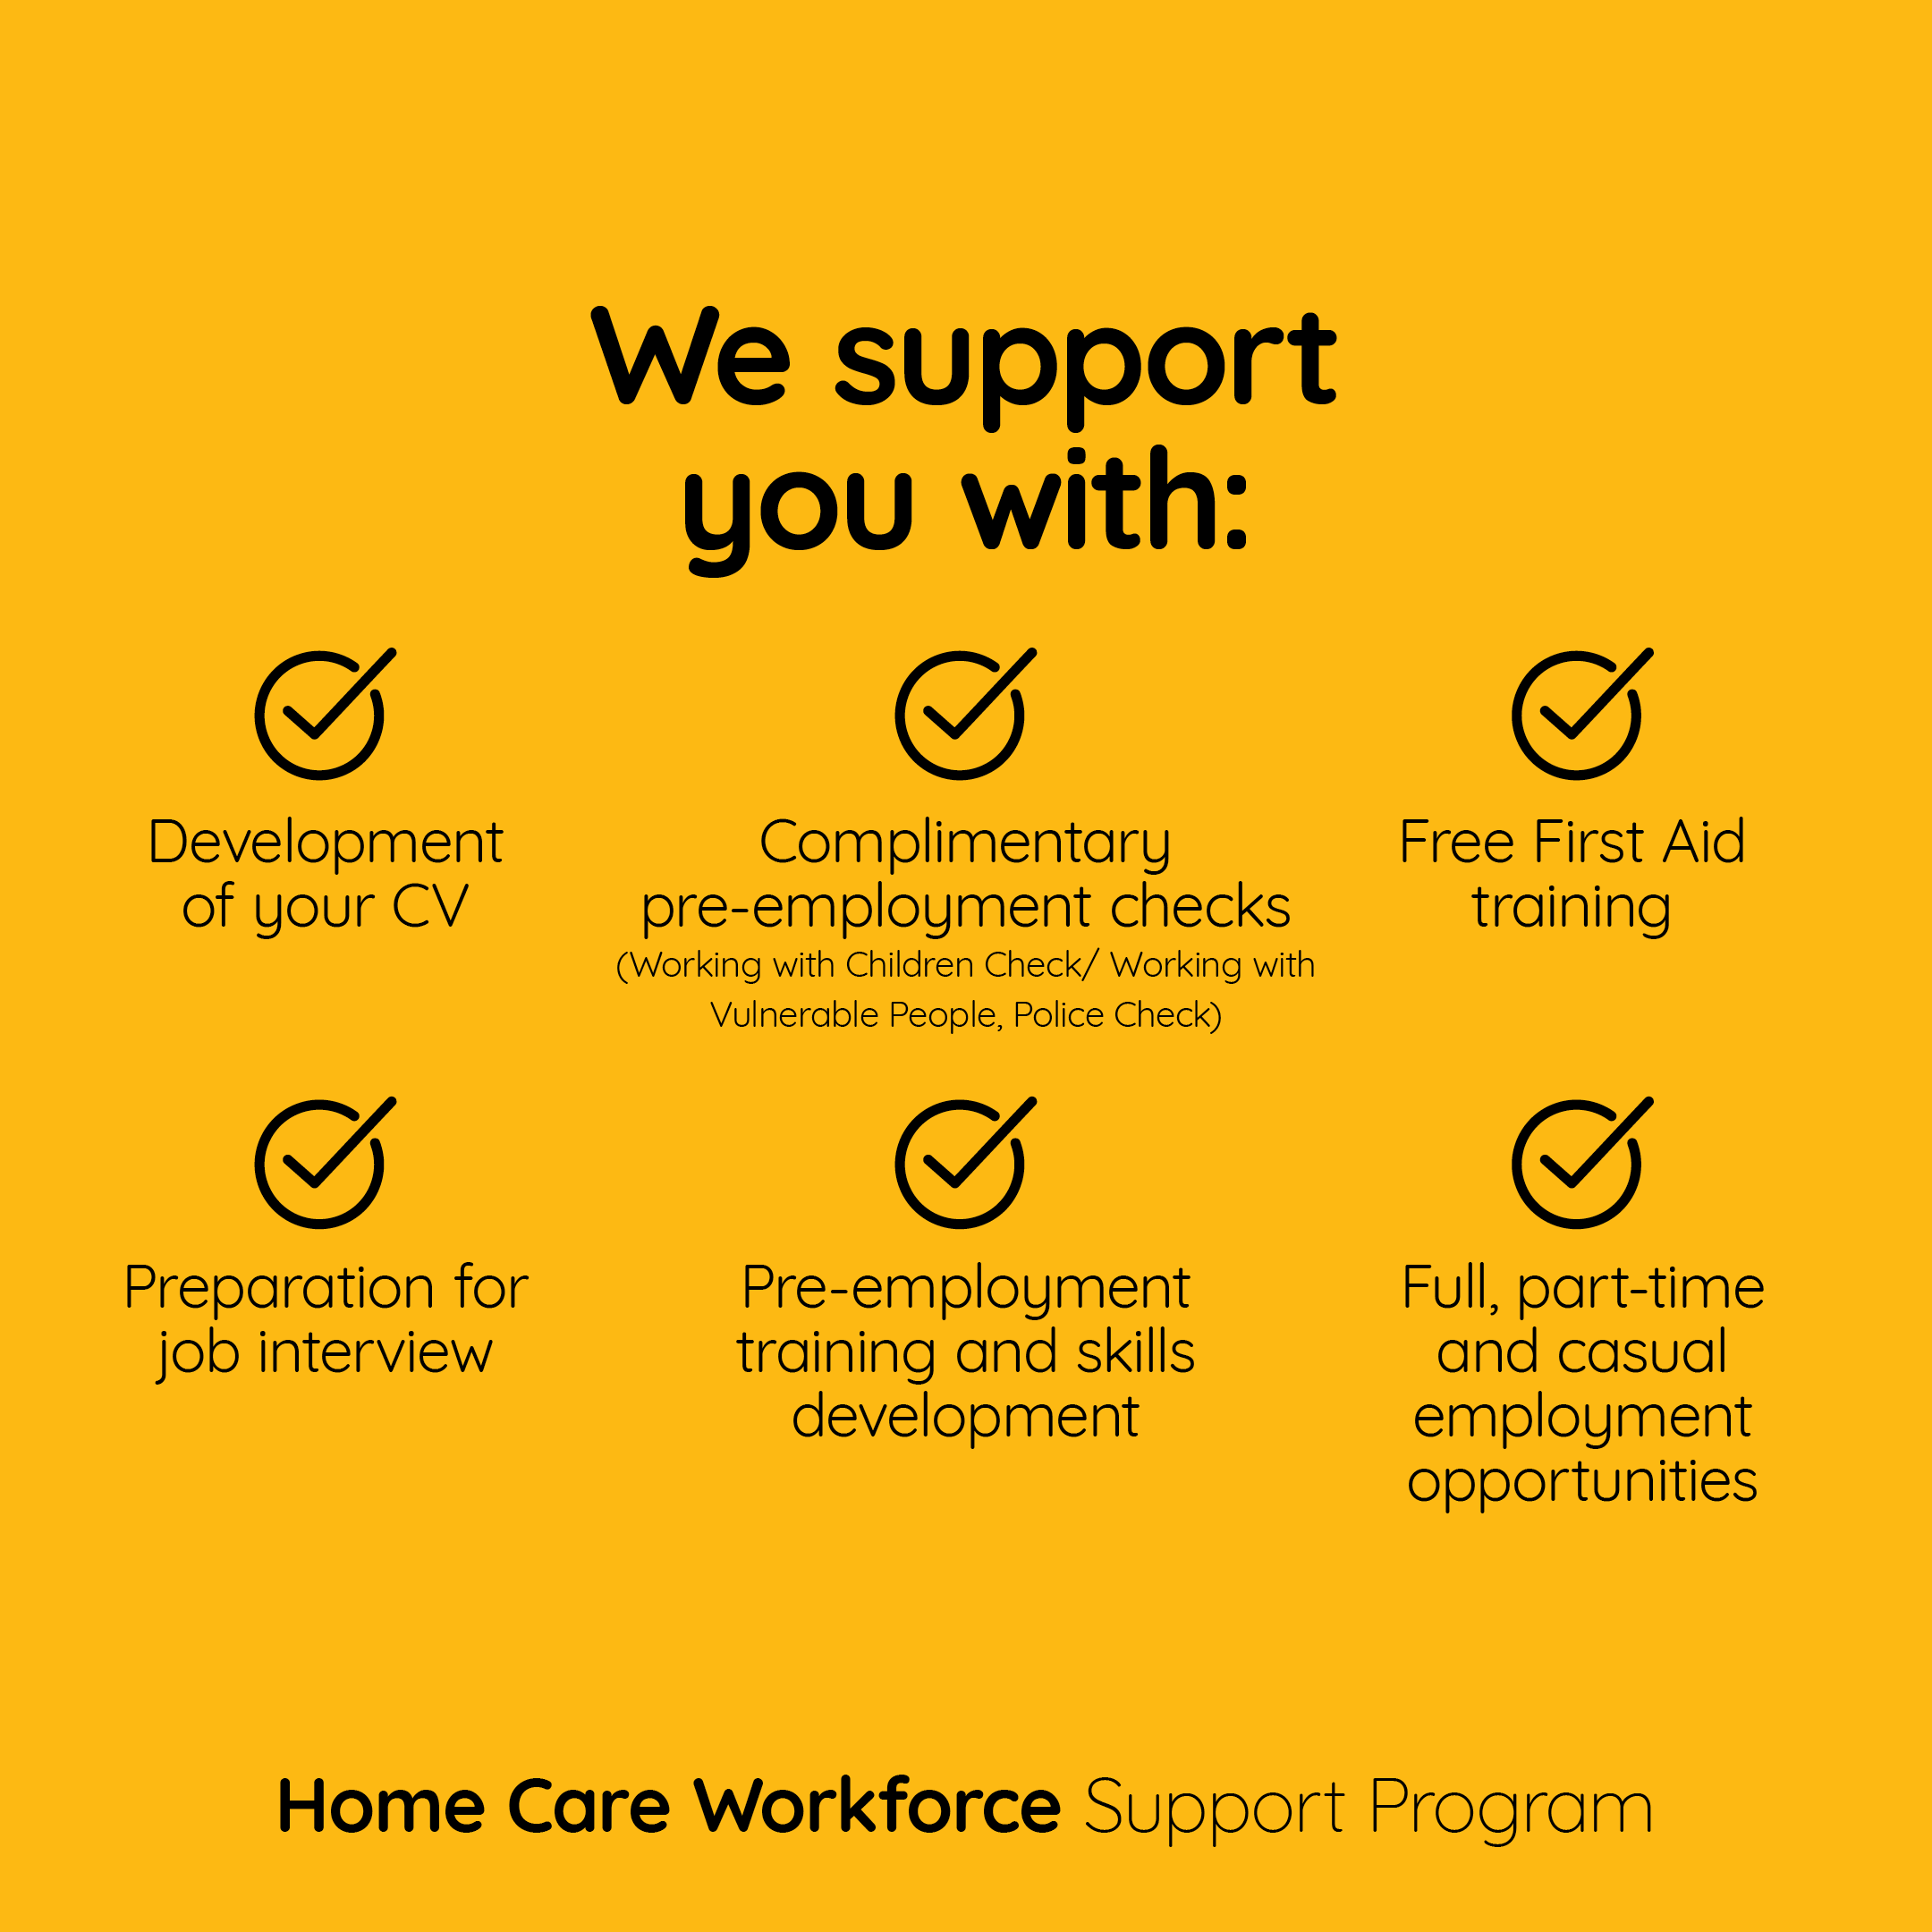 SSI Home Care Workforce Support Program benefits